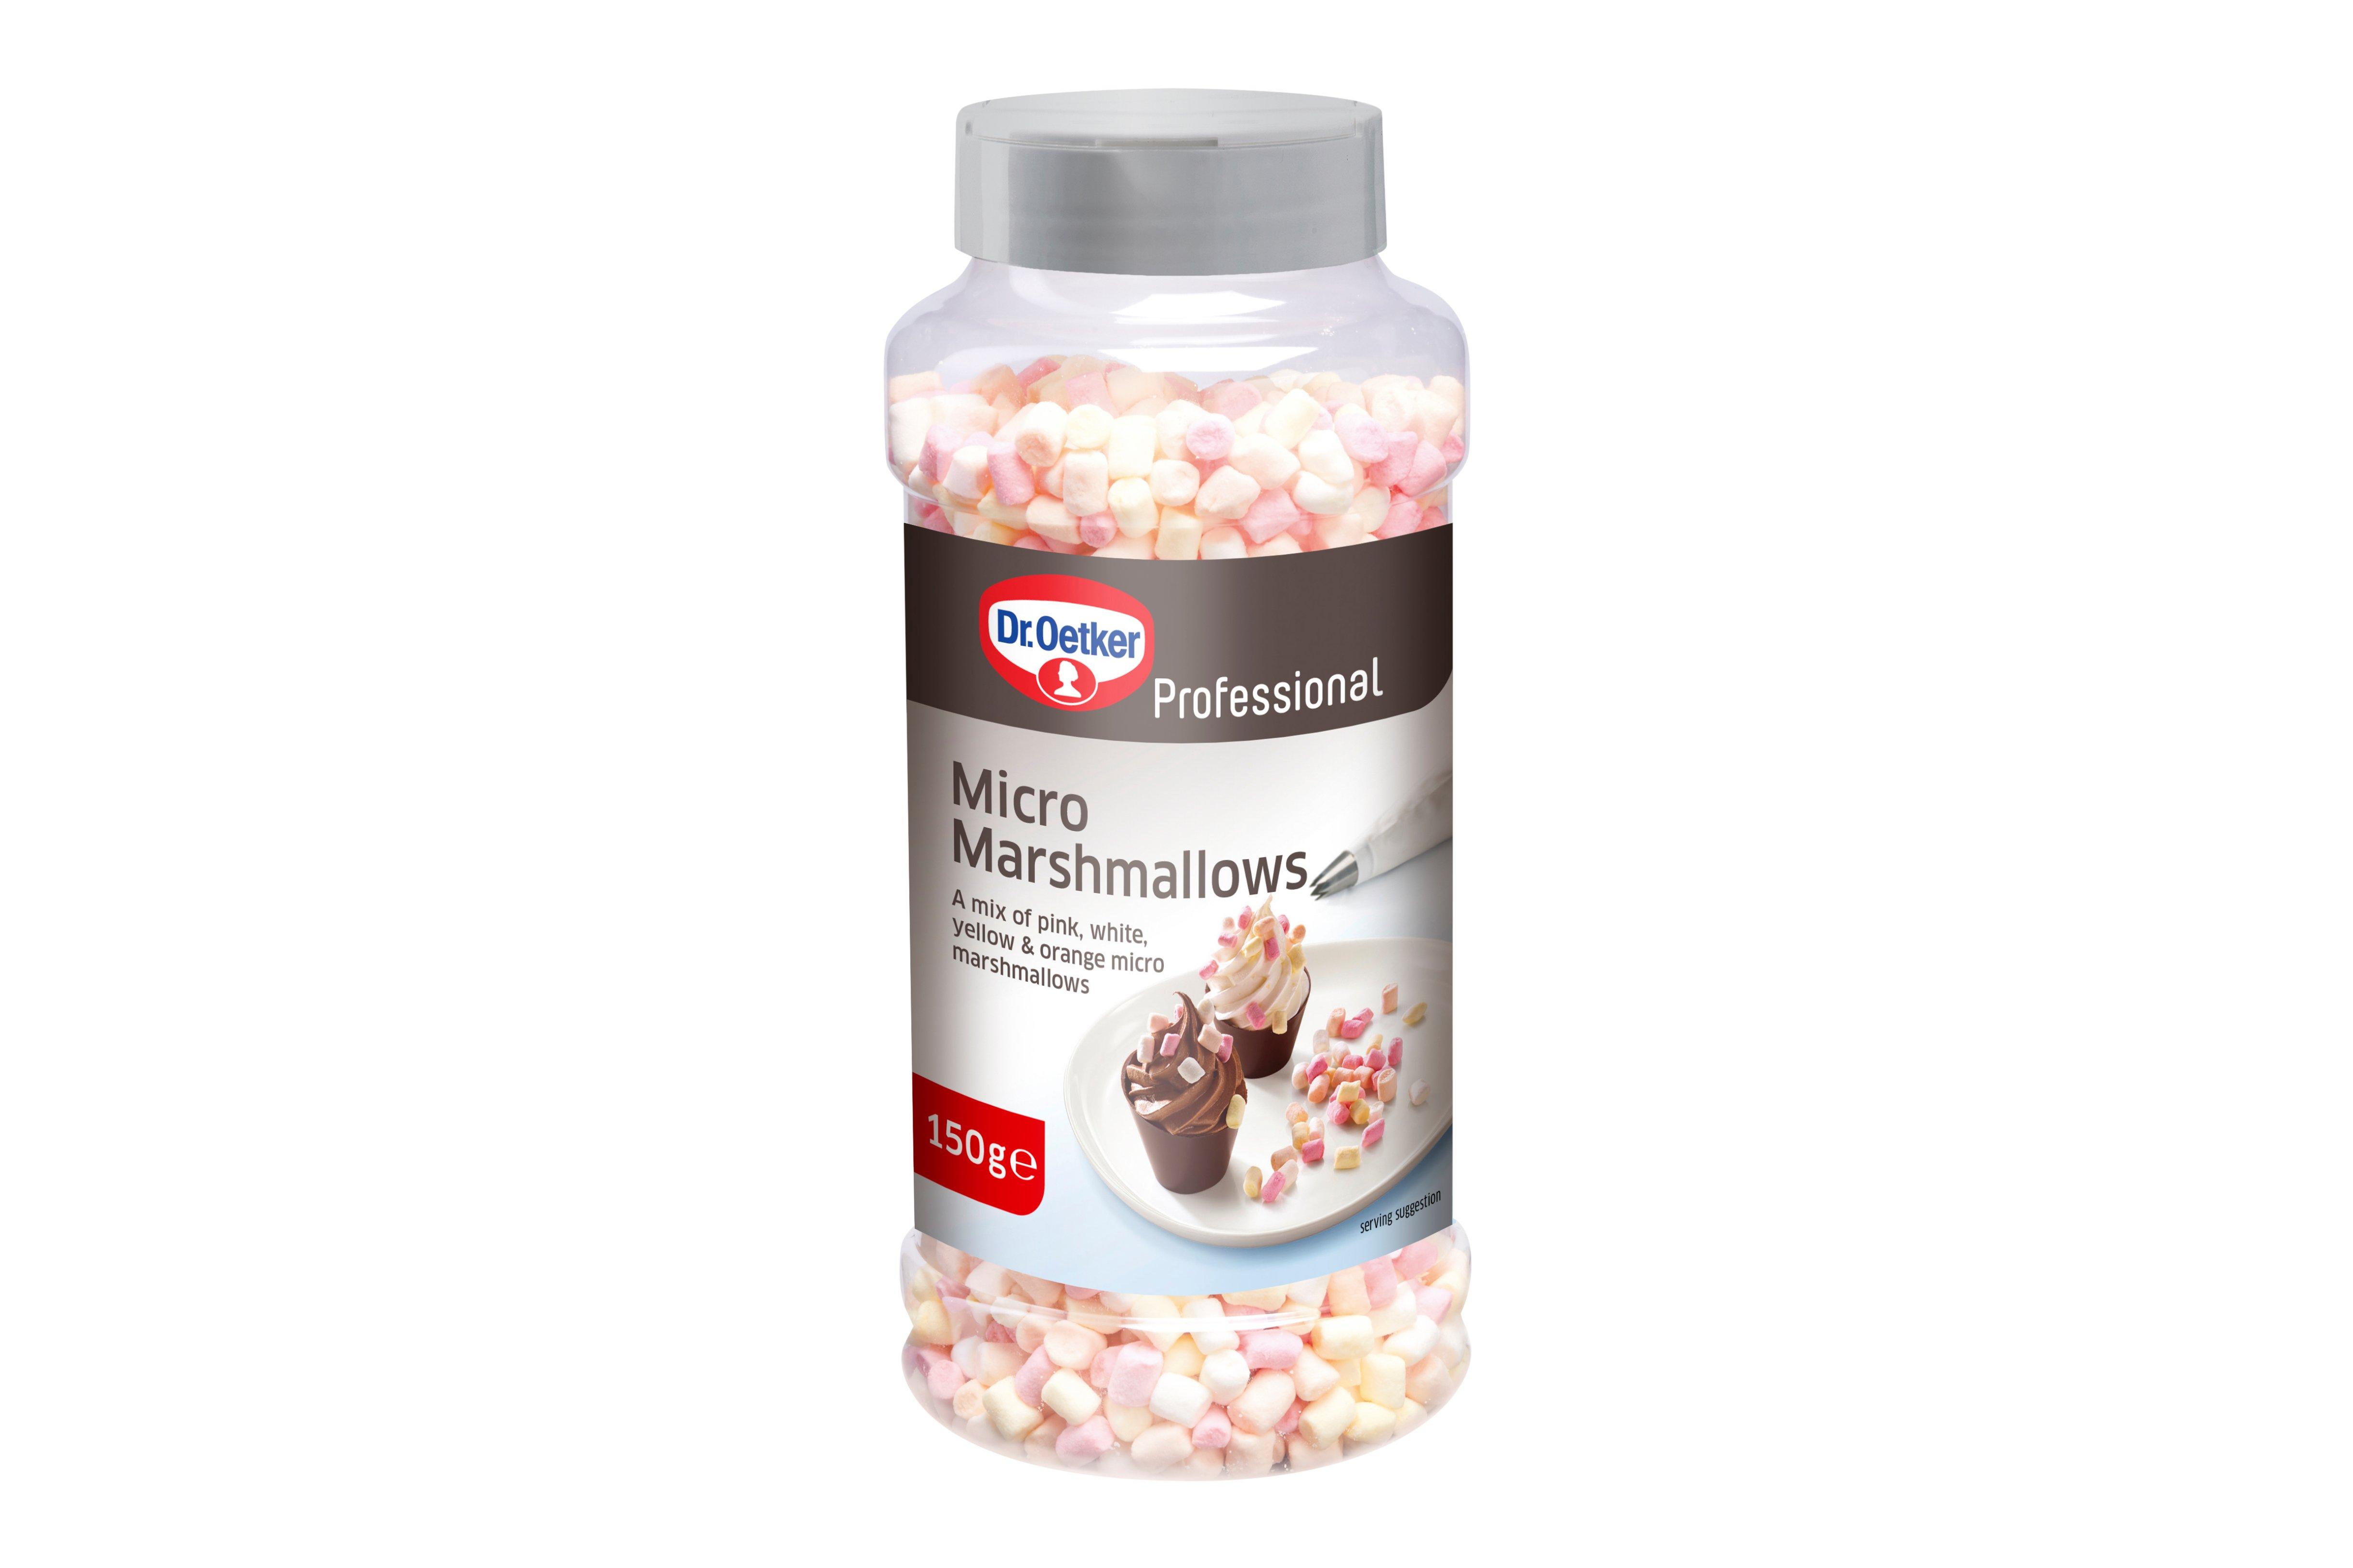 Dr. Oetker Micro Marshmallow Mix